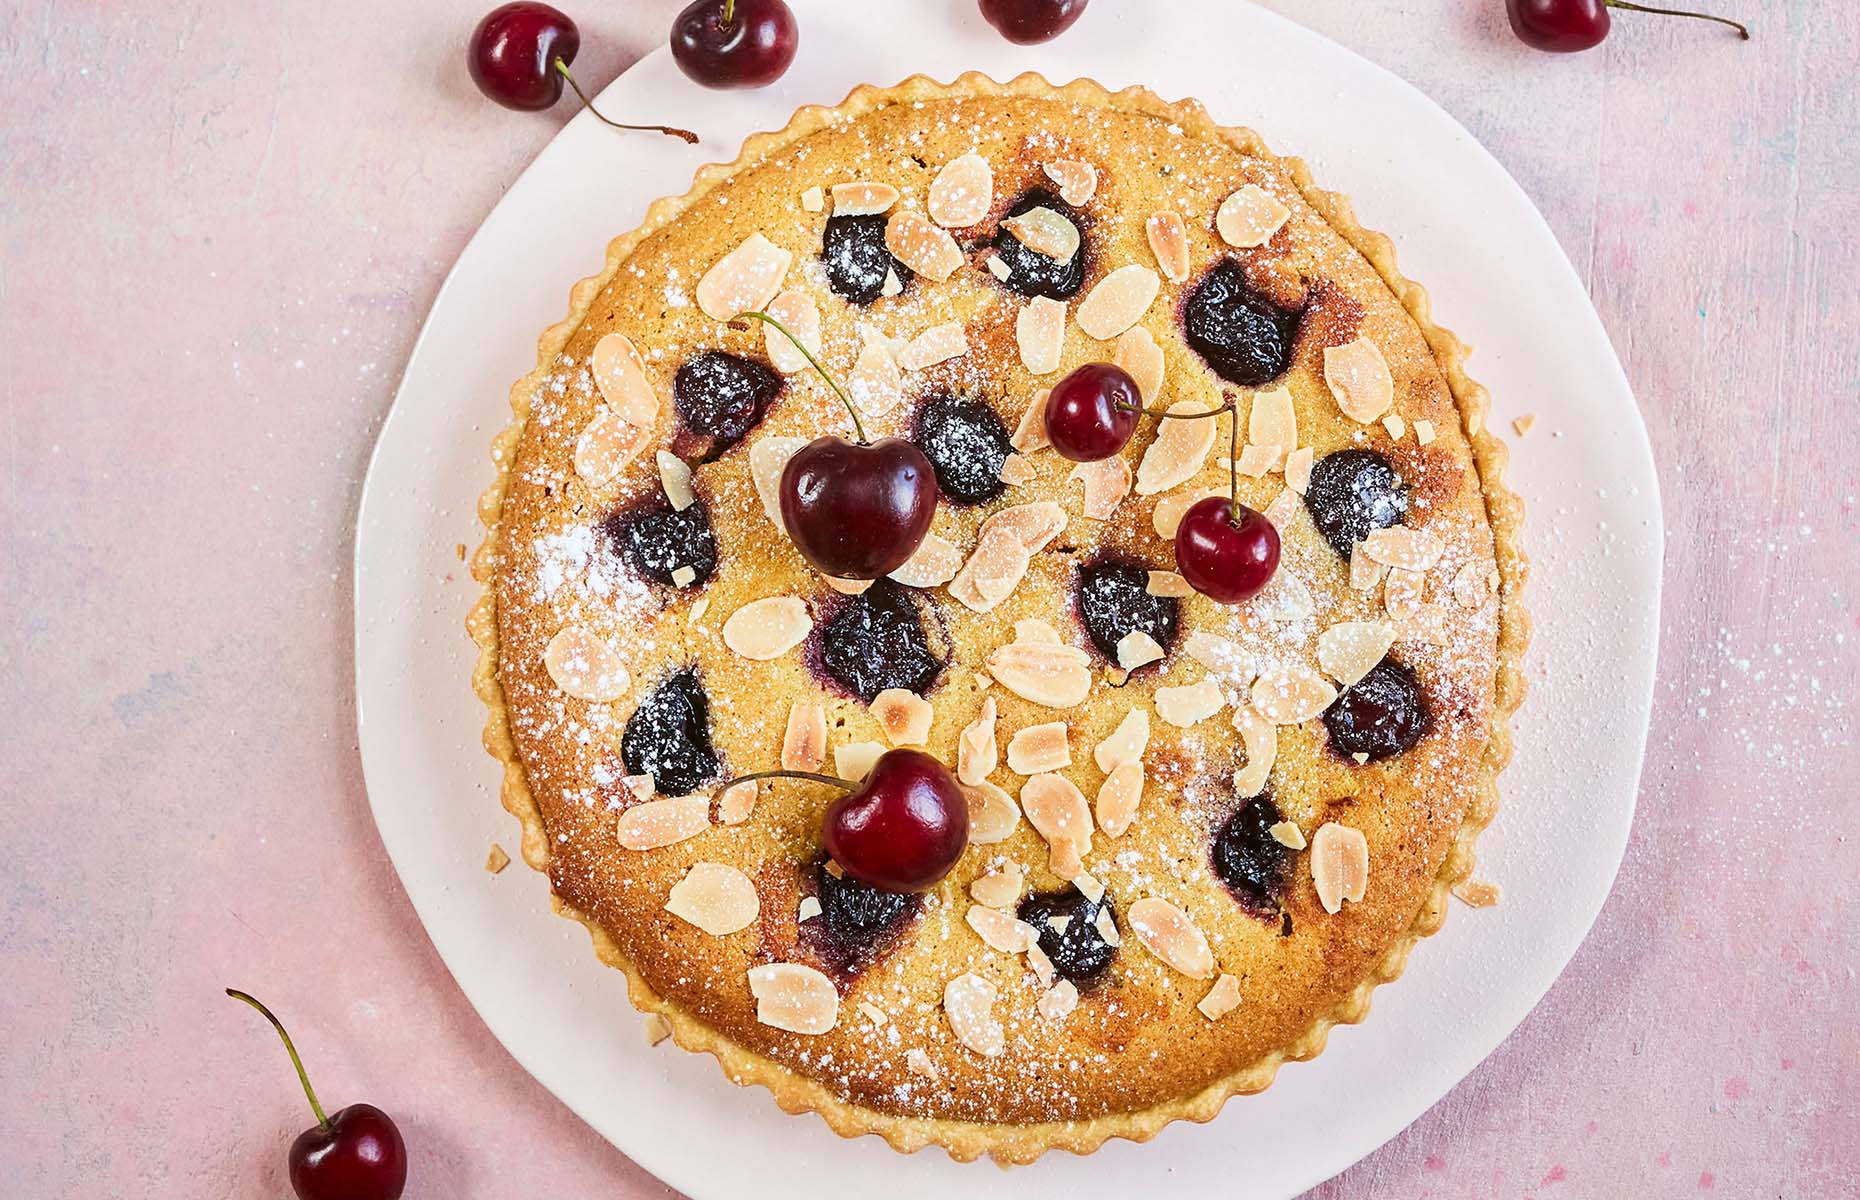 Cherry and pistachio frangipane tart (Image: Maldon/loveFOOD)